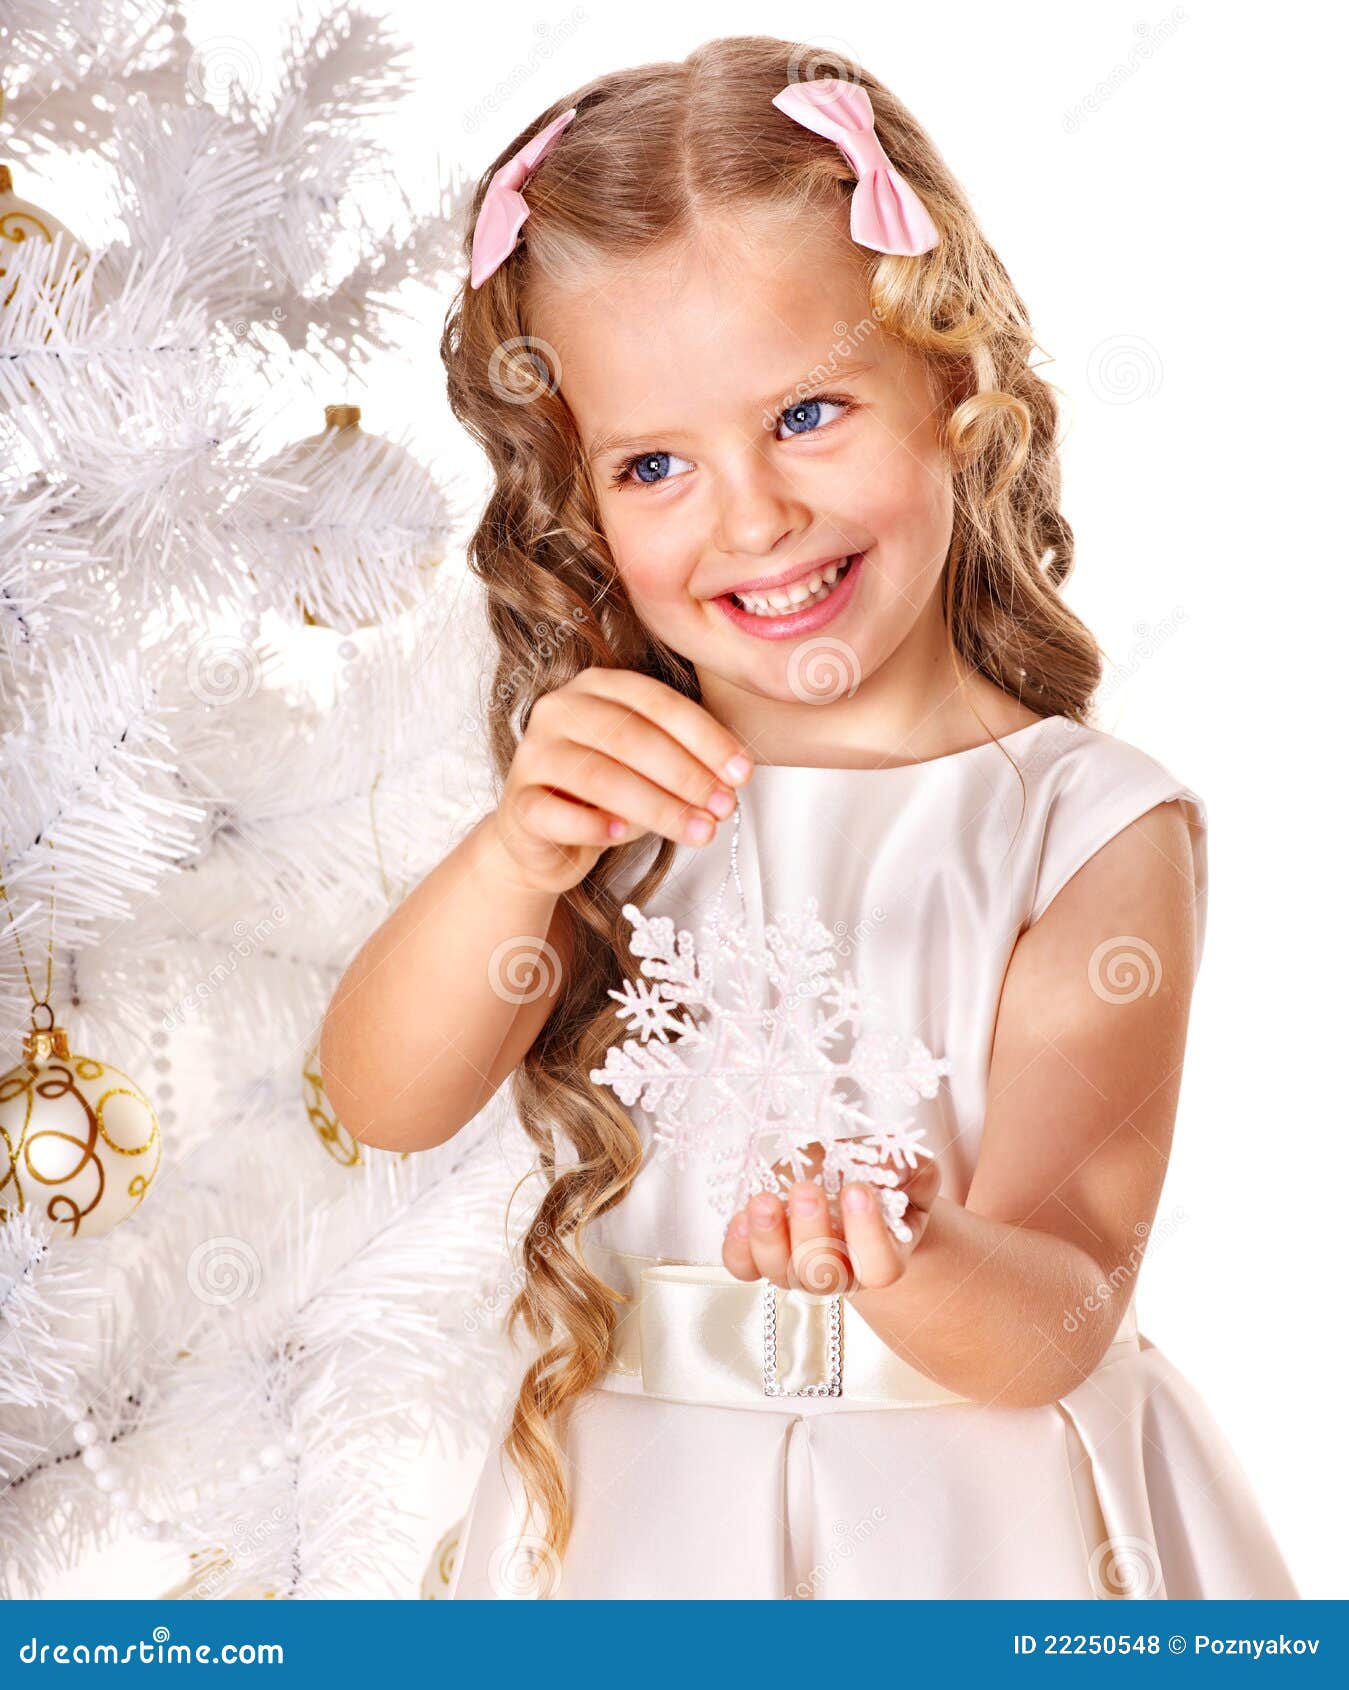 child decorate christmas tree.